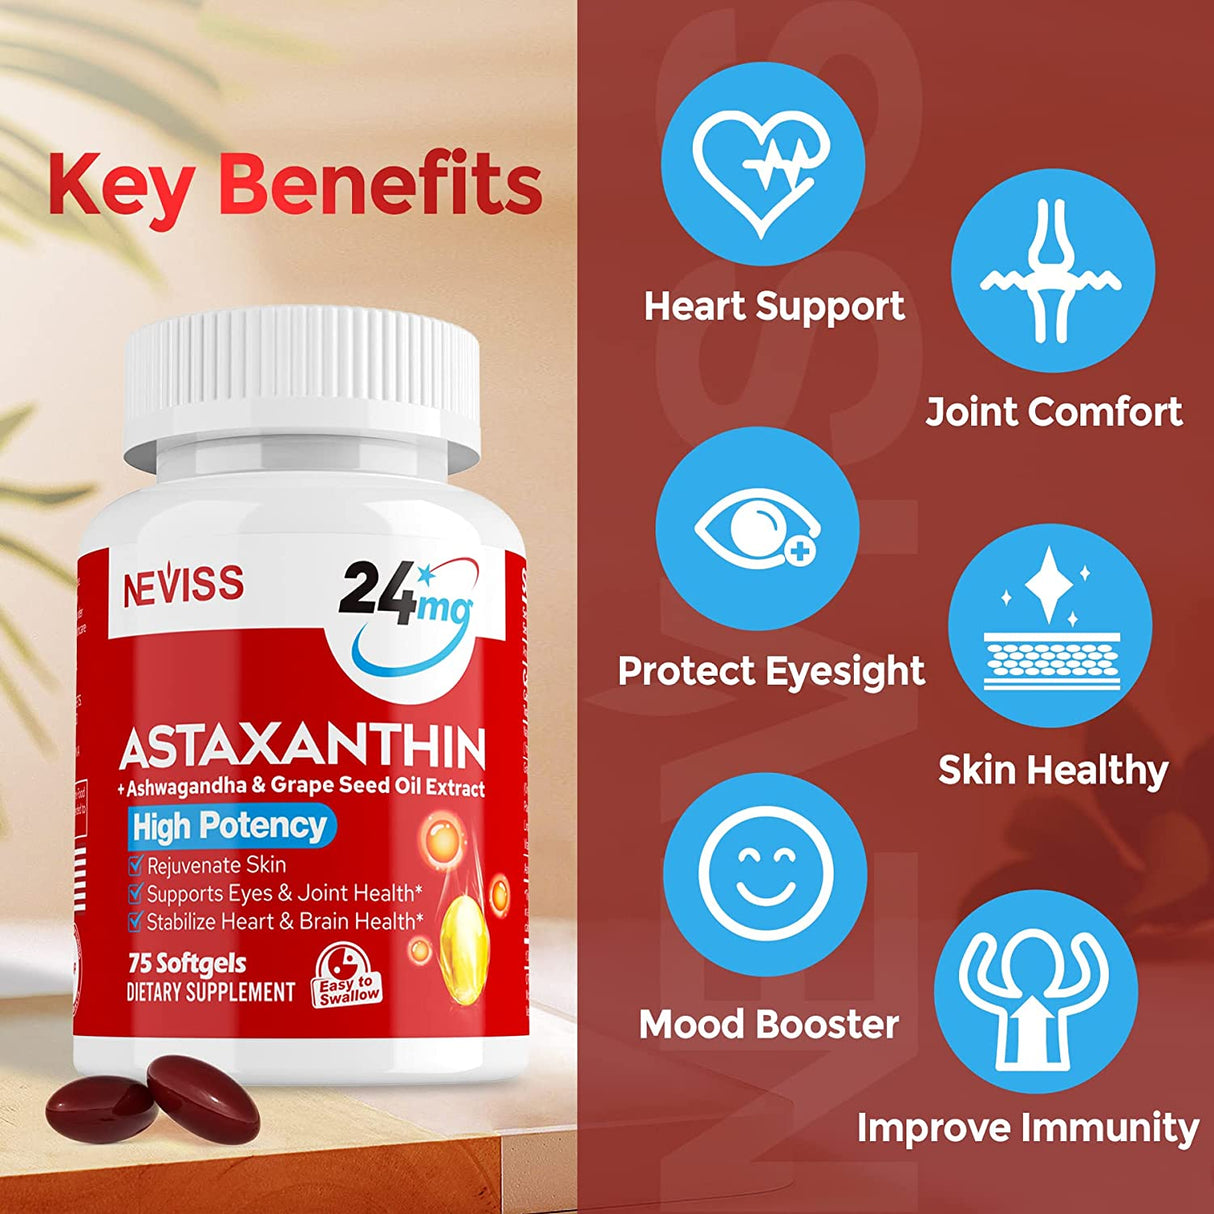 Neviss Astaxanthin 24Mg. 150 Capsulas Blandas - The Red Vitamin MX